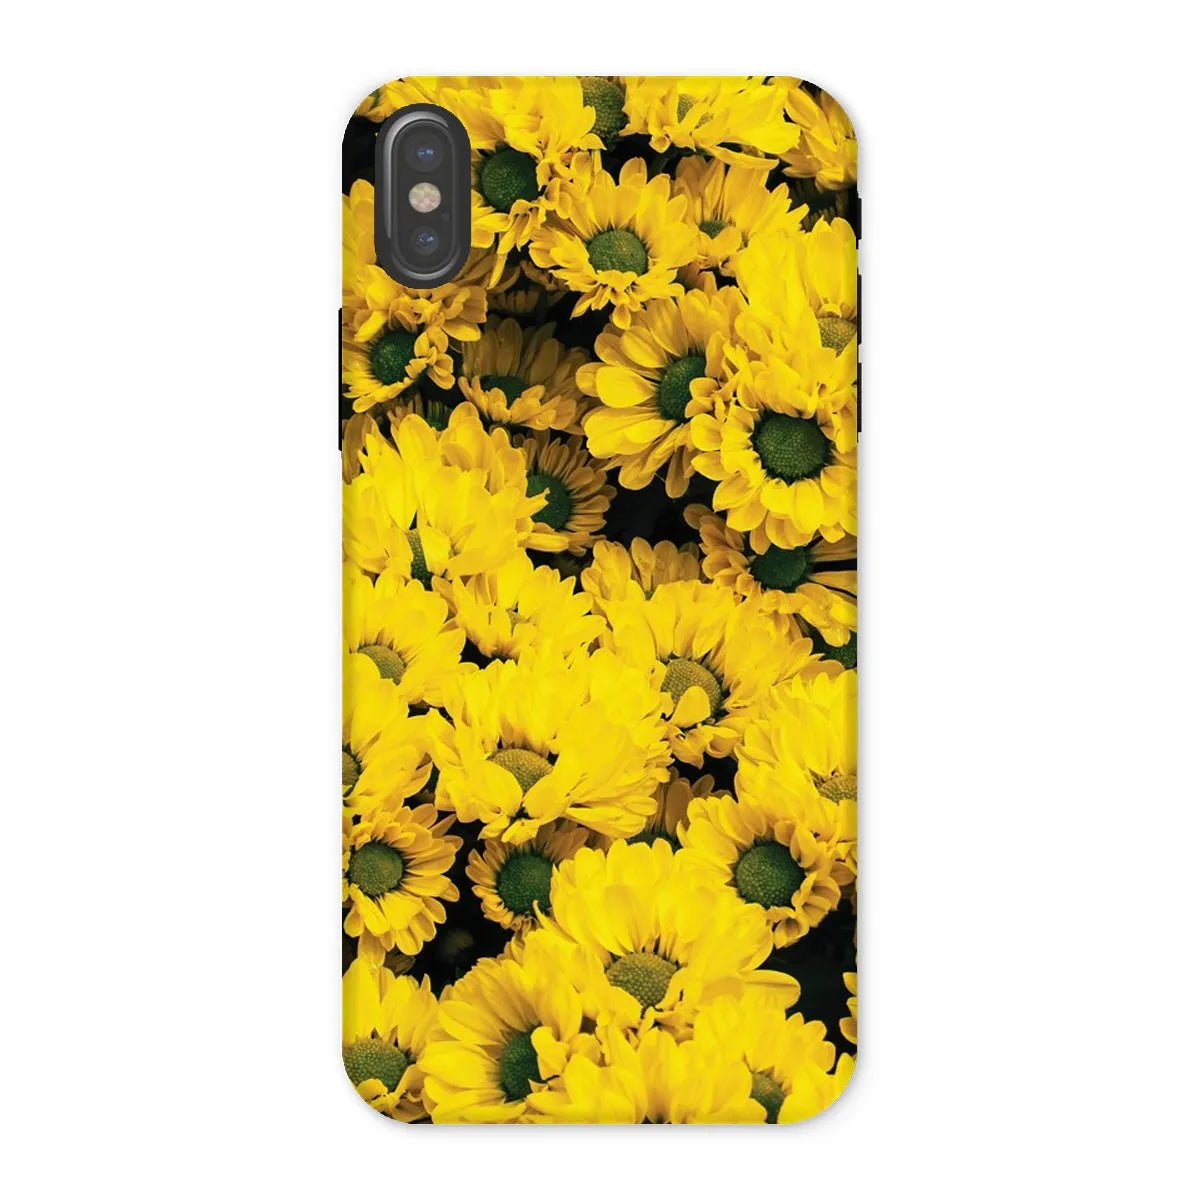 Yellow Brick Road Tough Phone Case - Iphone x / Matte - Mobile Phone Cases - Aesthetic Art